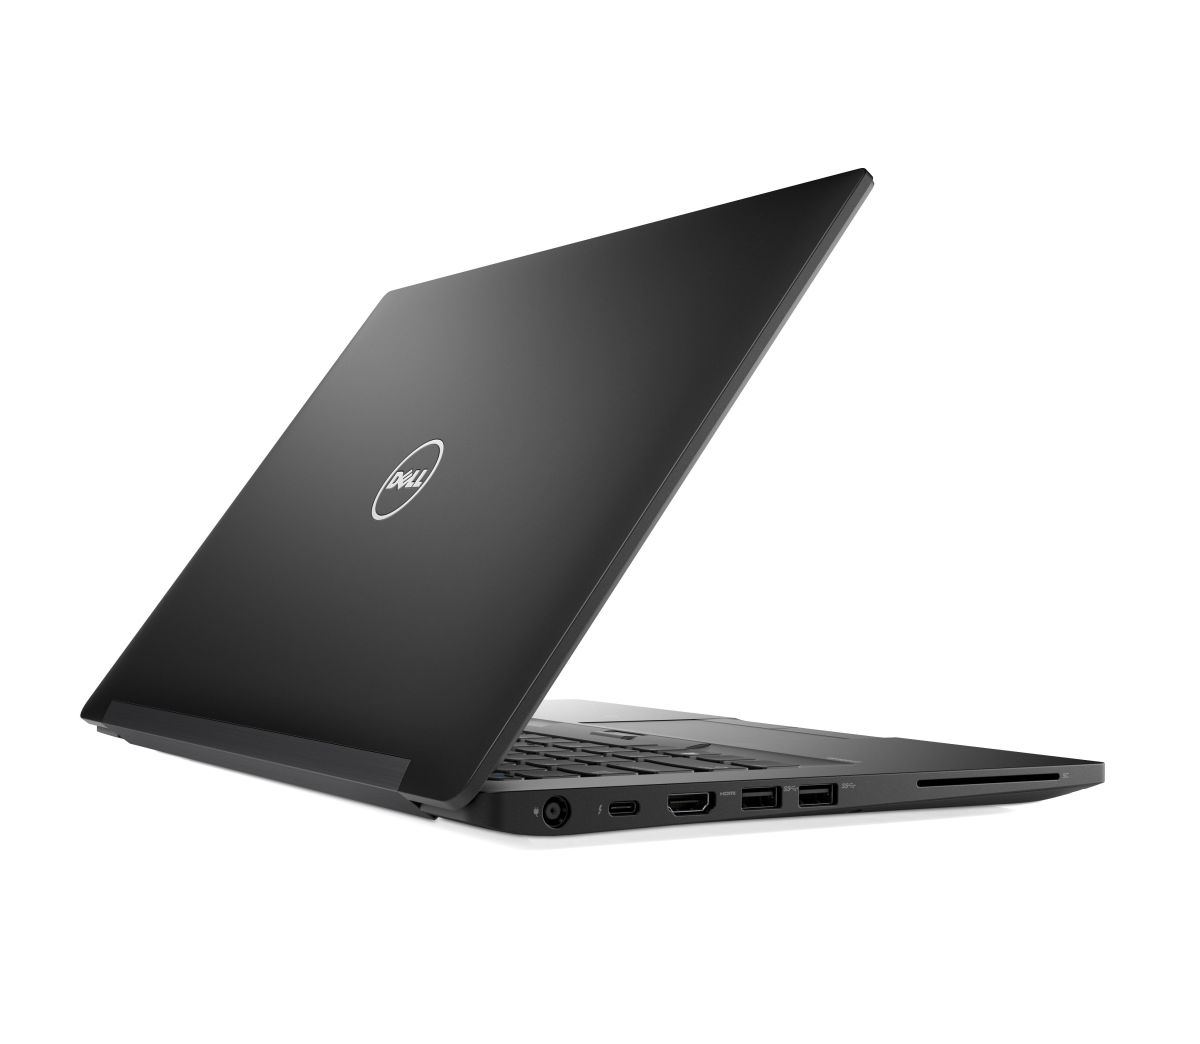 Dell Latitude 7490 Jfhx6 Laptop Specifications